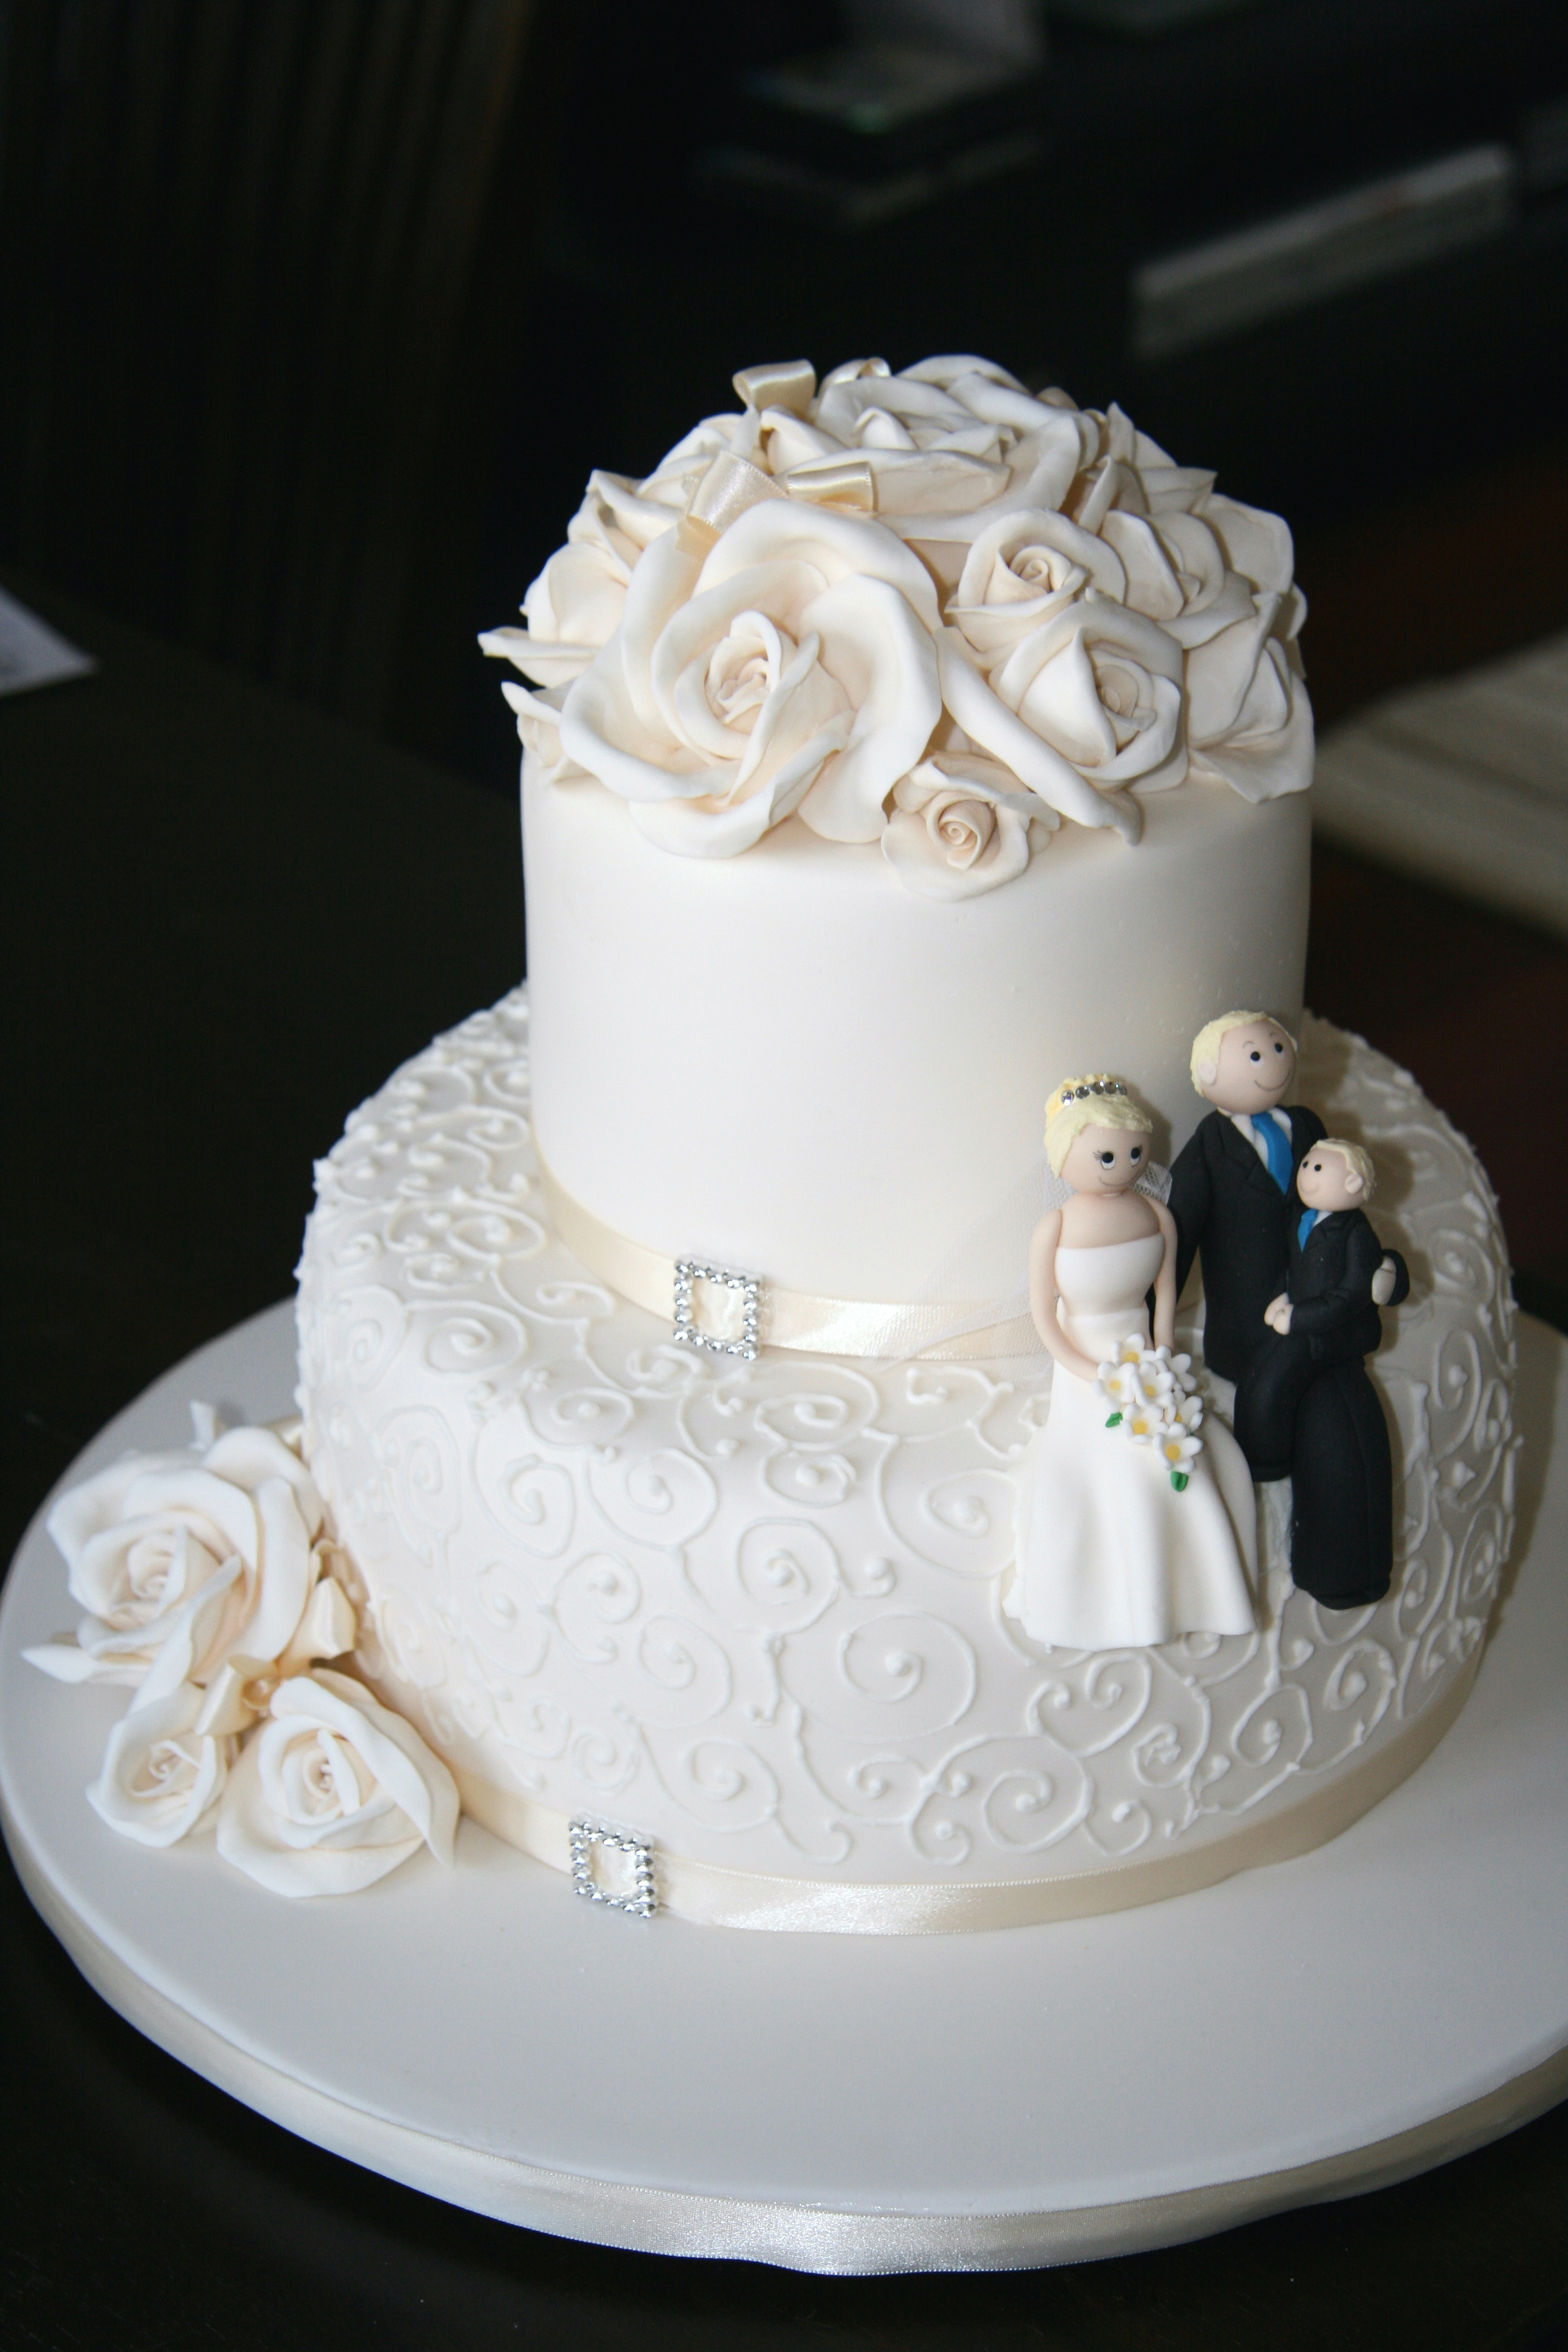 2 Tier Wedding Cake Ideas